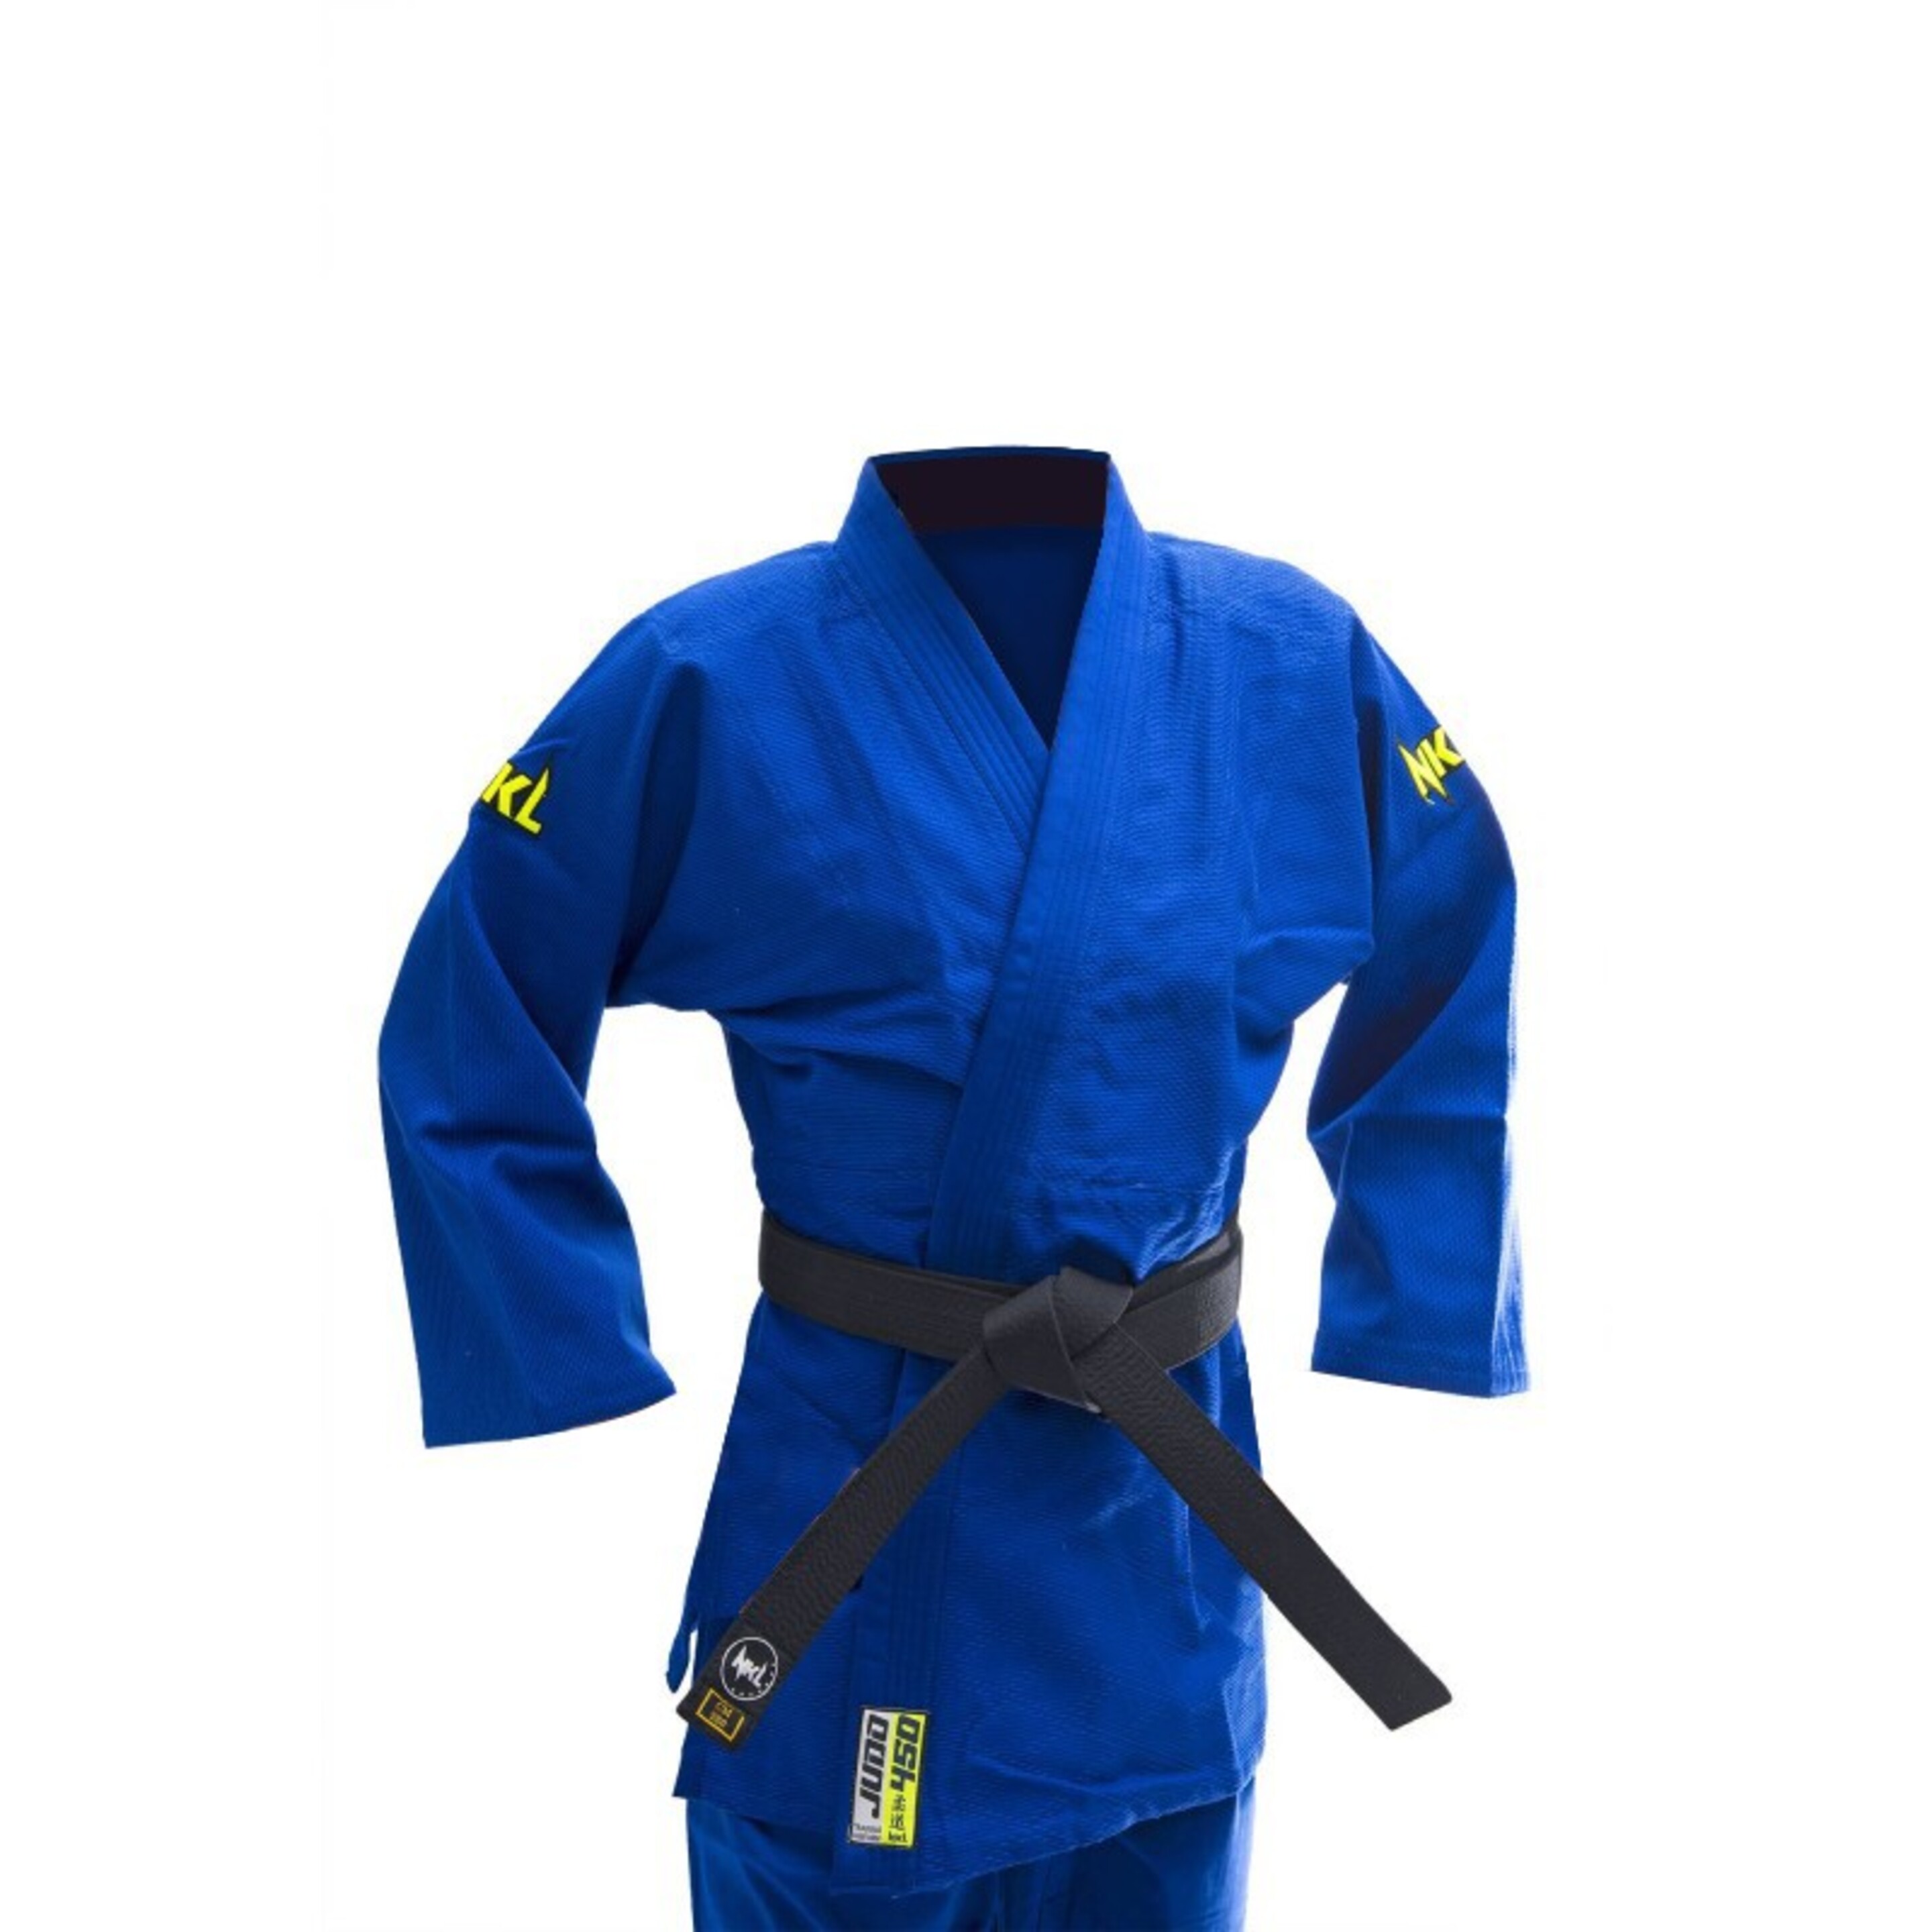 Judogi Nkl Top Training 2.0 - azul - 